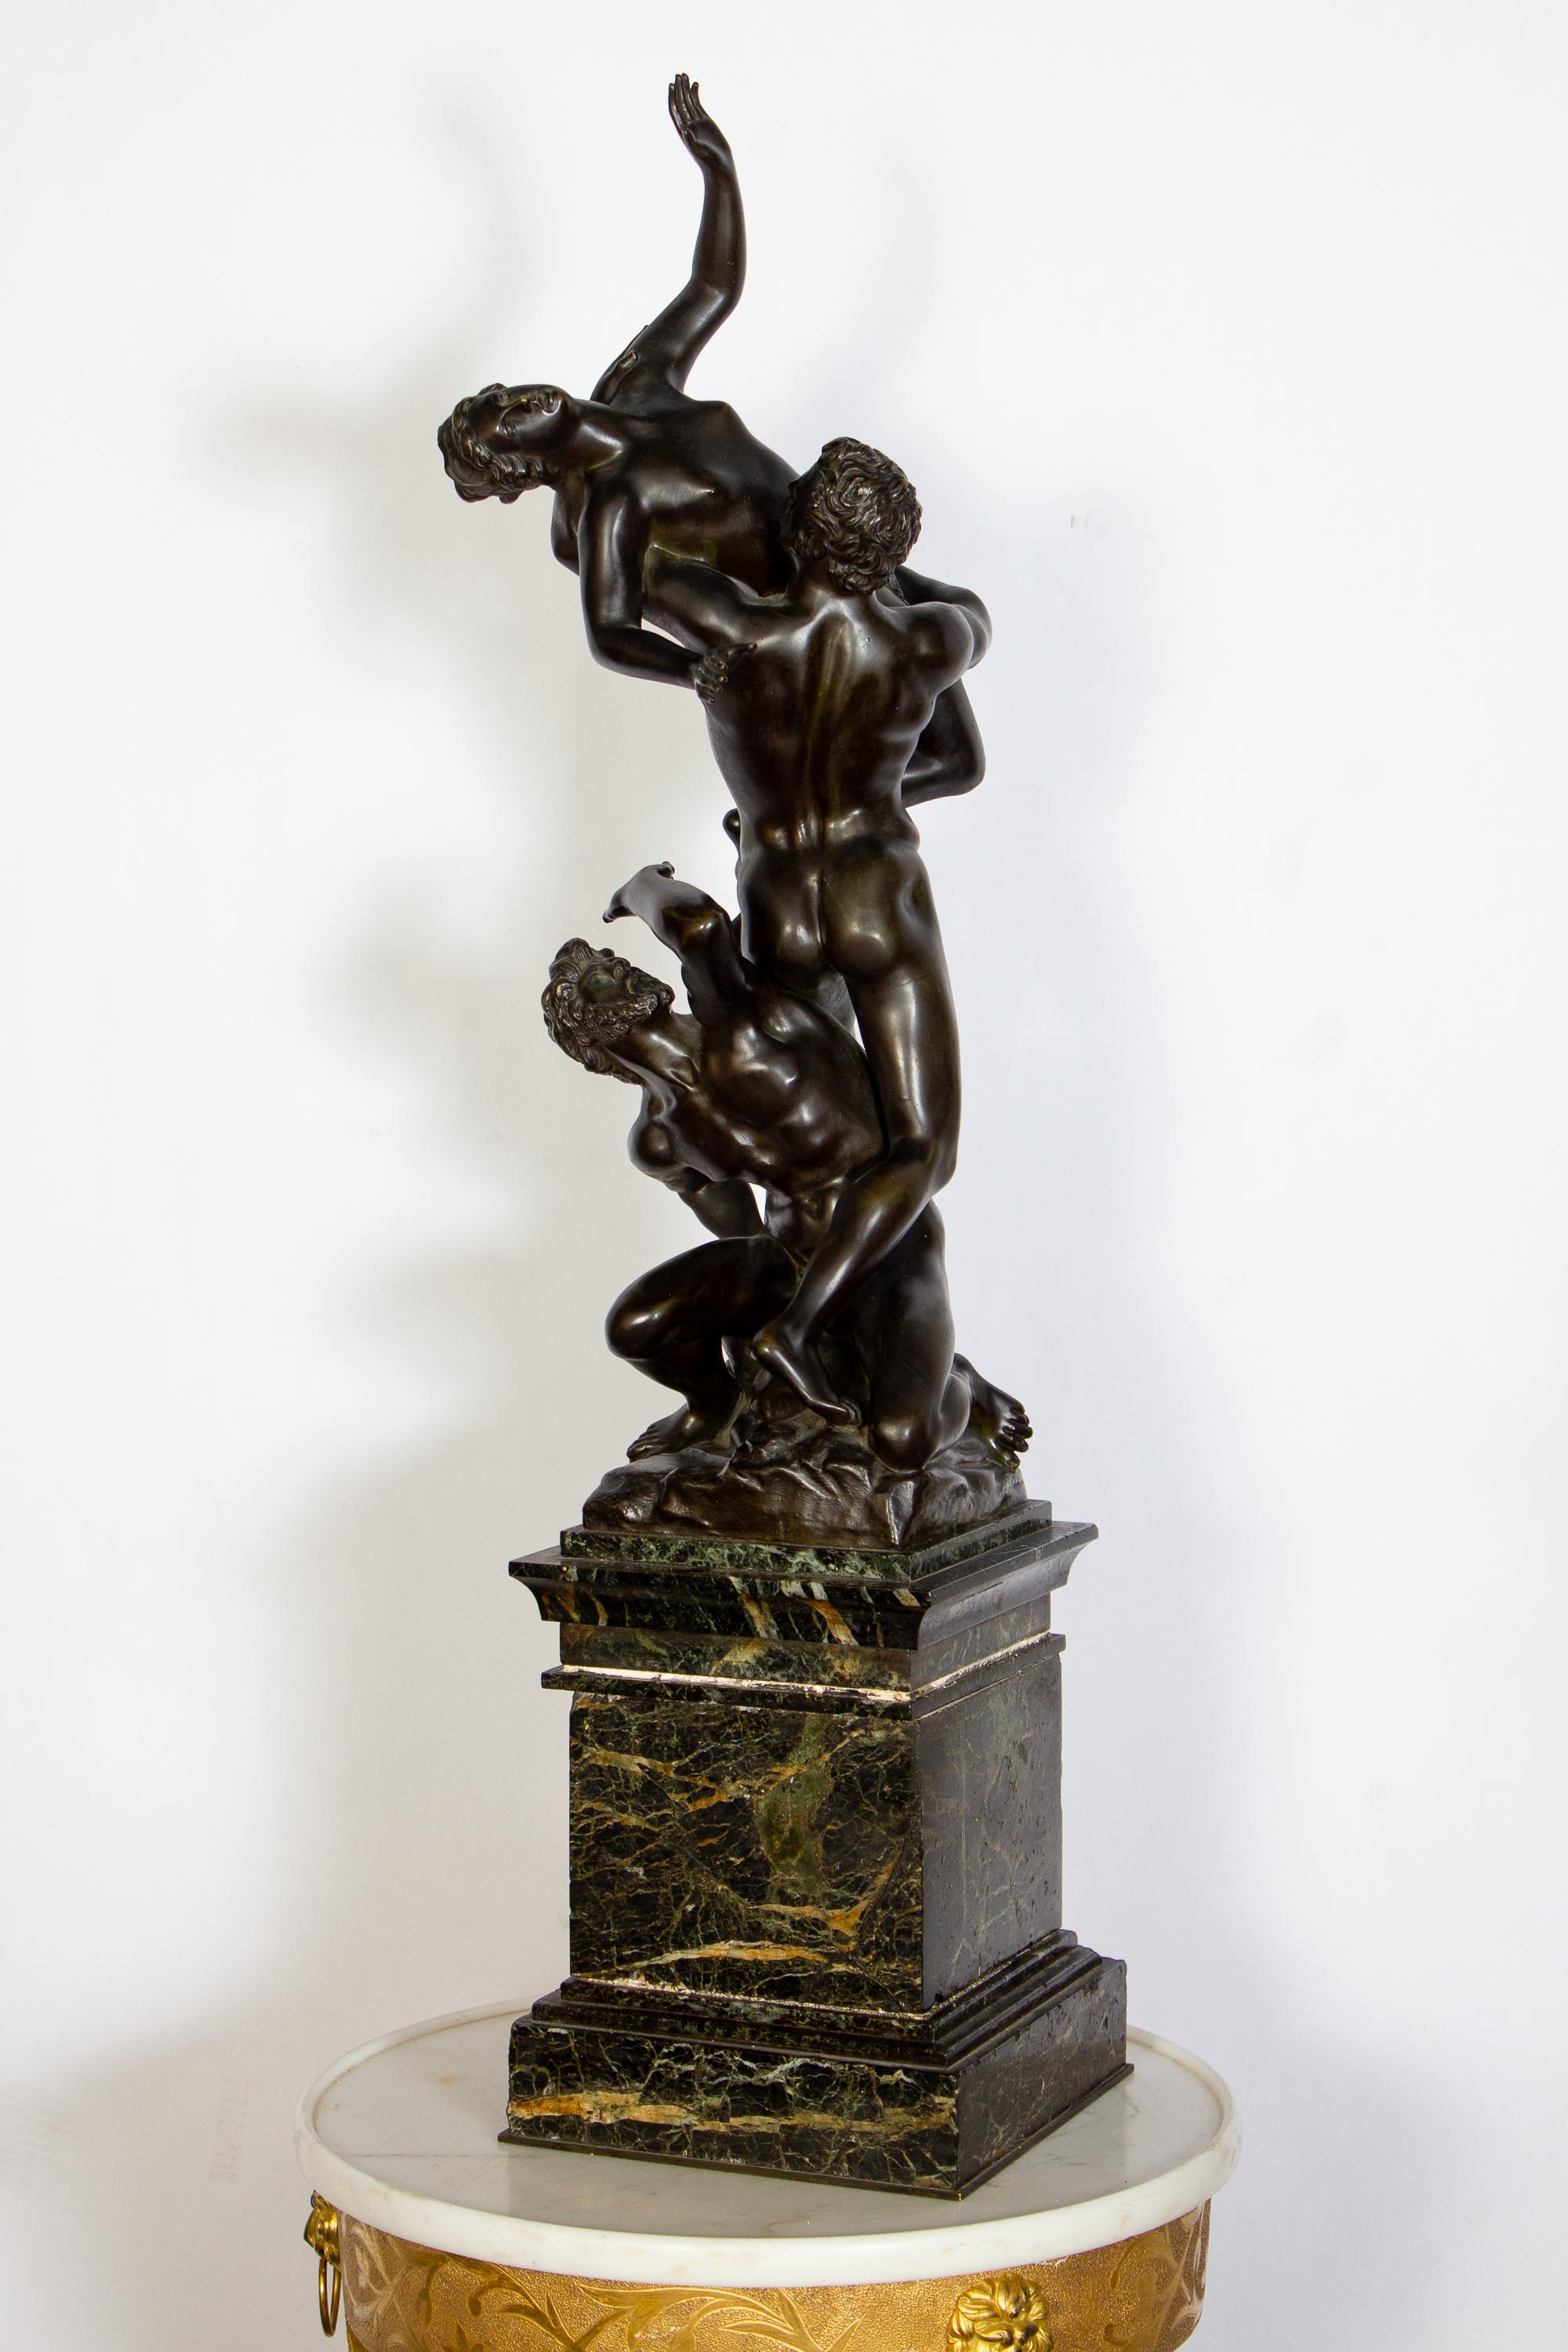 The Rape of Sabine Iconic Bronze Sculpture 1930 - Gold Figurative Sculpture by Jean de Boulogne (Giambologna)